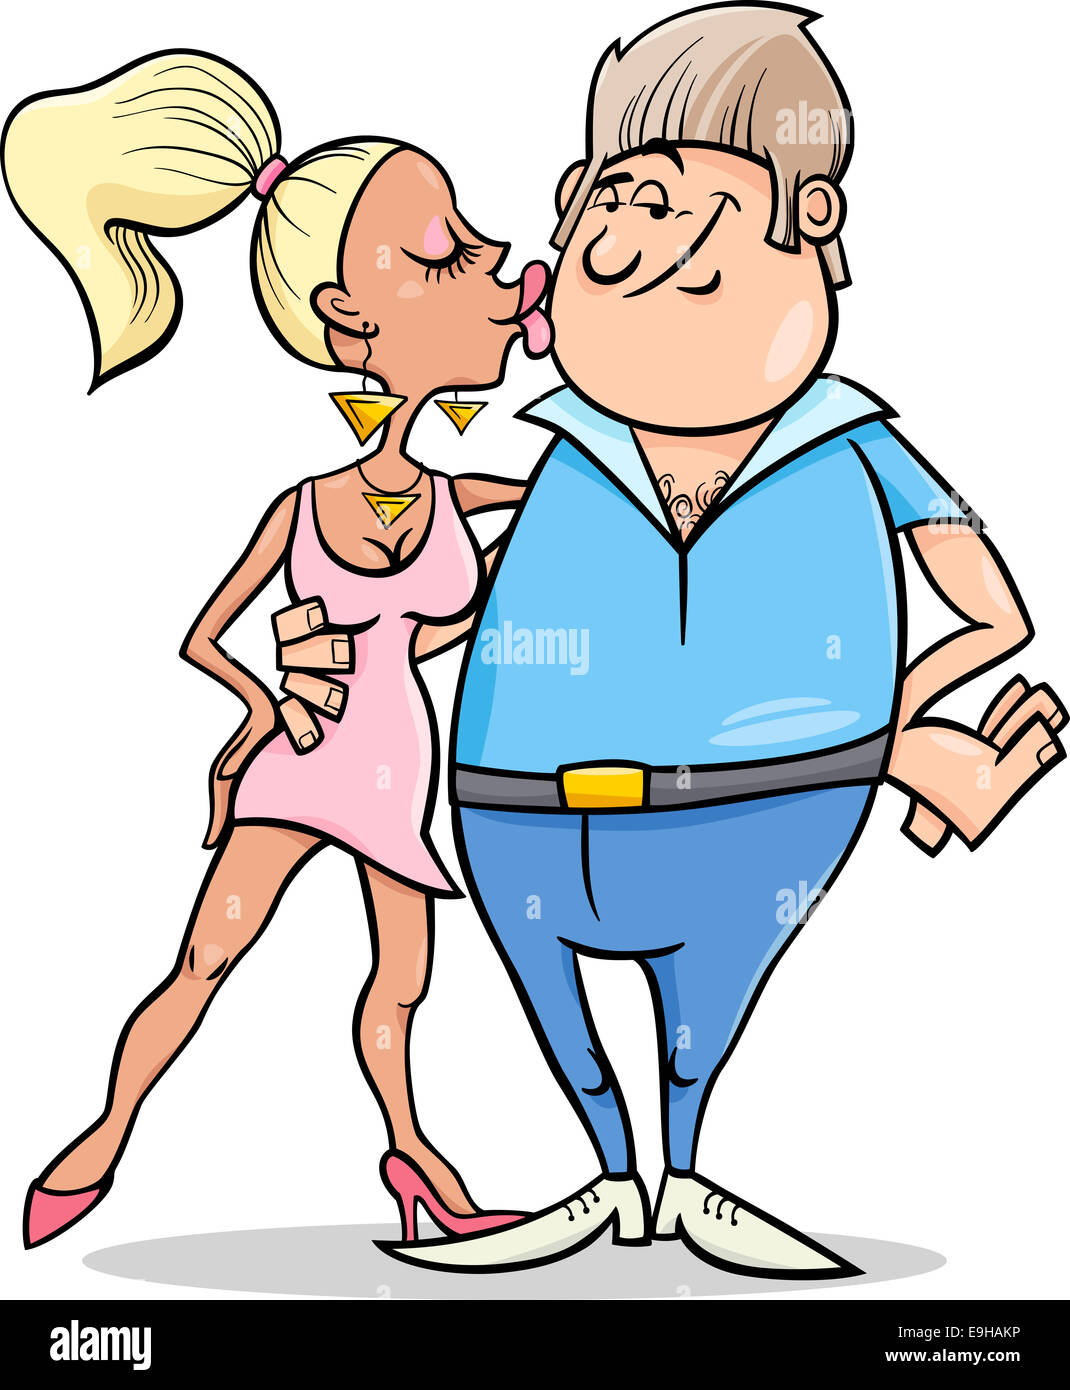 Cartoon Illustration of Eccentric Couple in Love Stock Photo